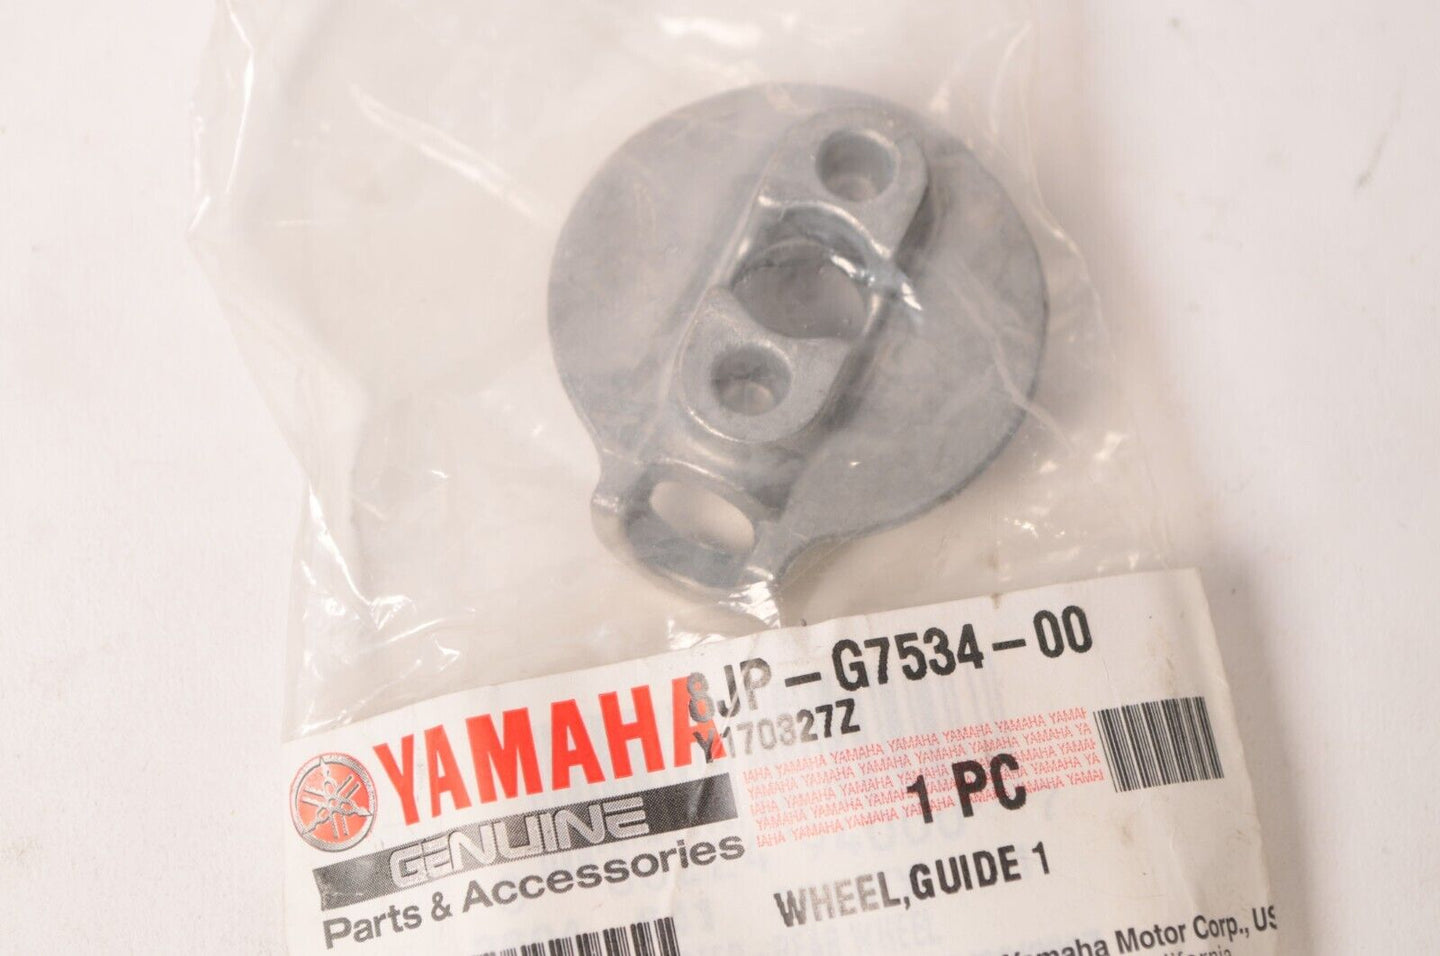 Genuine Yamaha Wheel Guide 1 - SRVipter Sidewinder ++  | 8JP-G7534-00